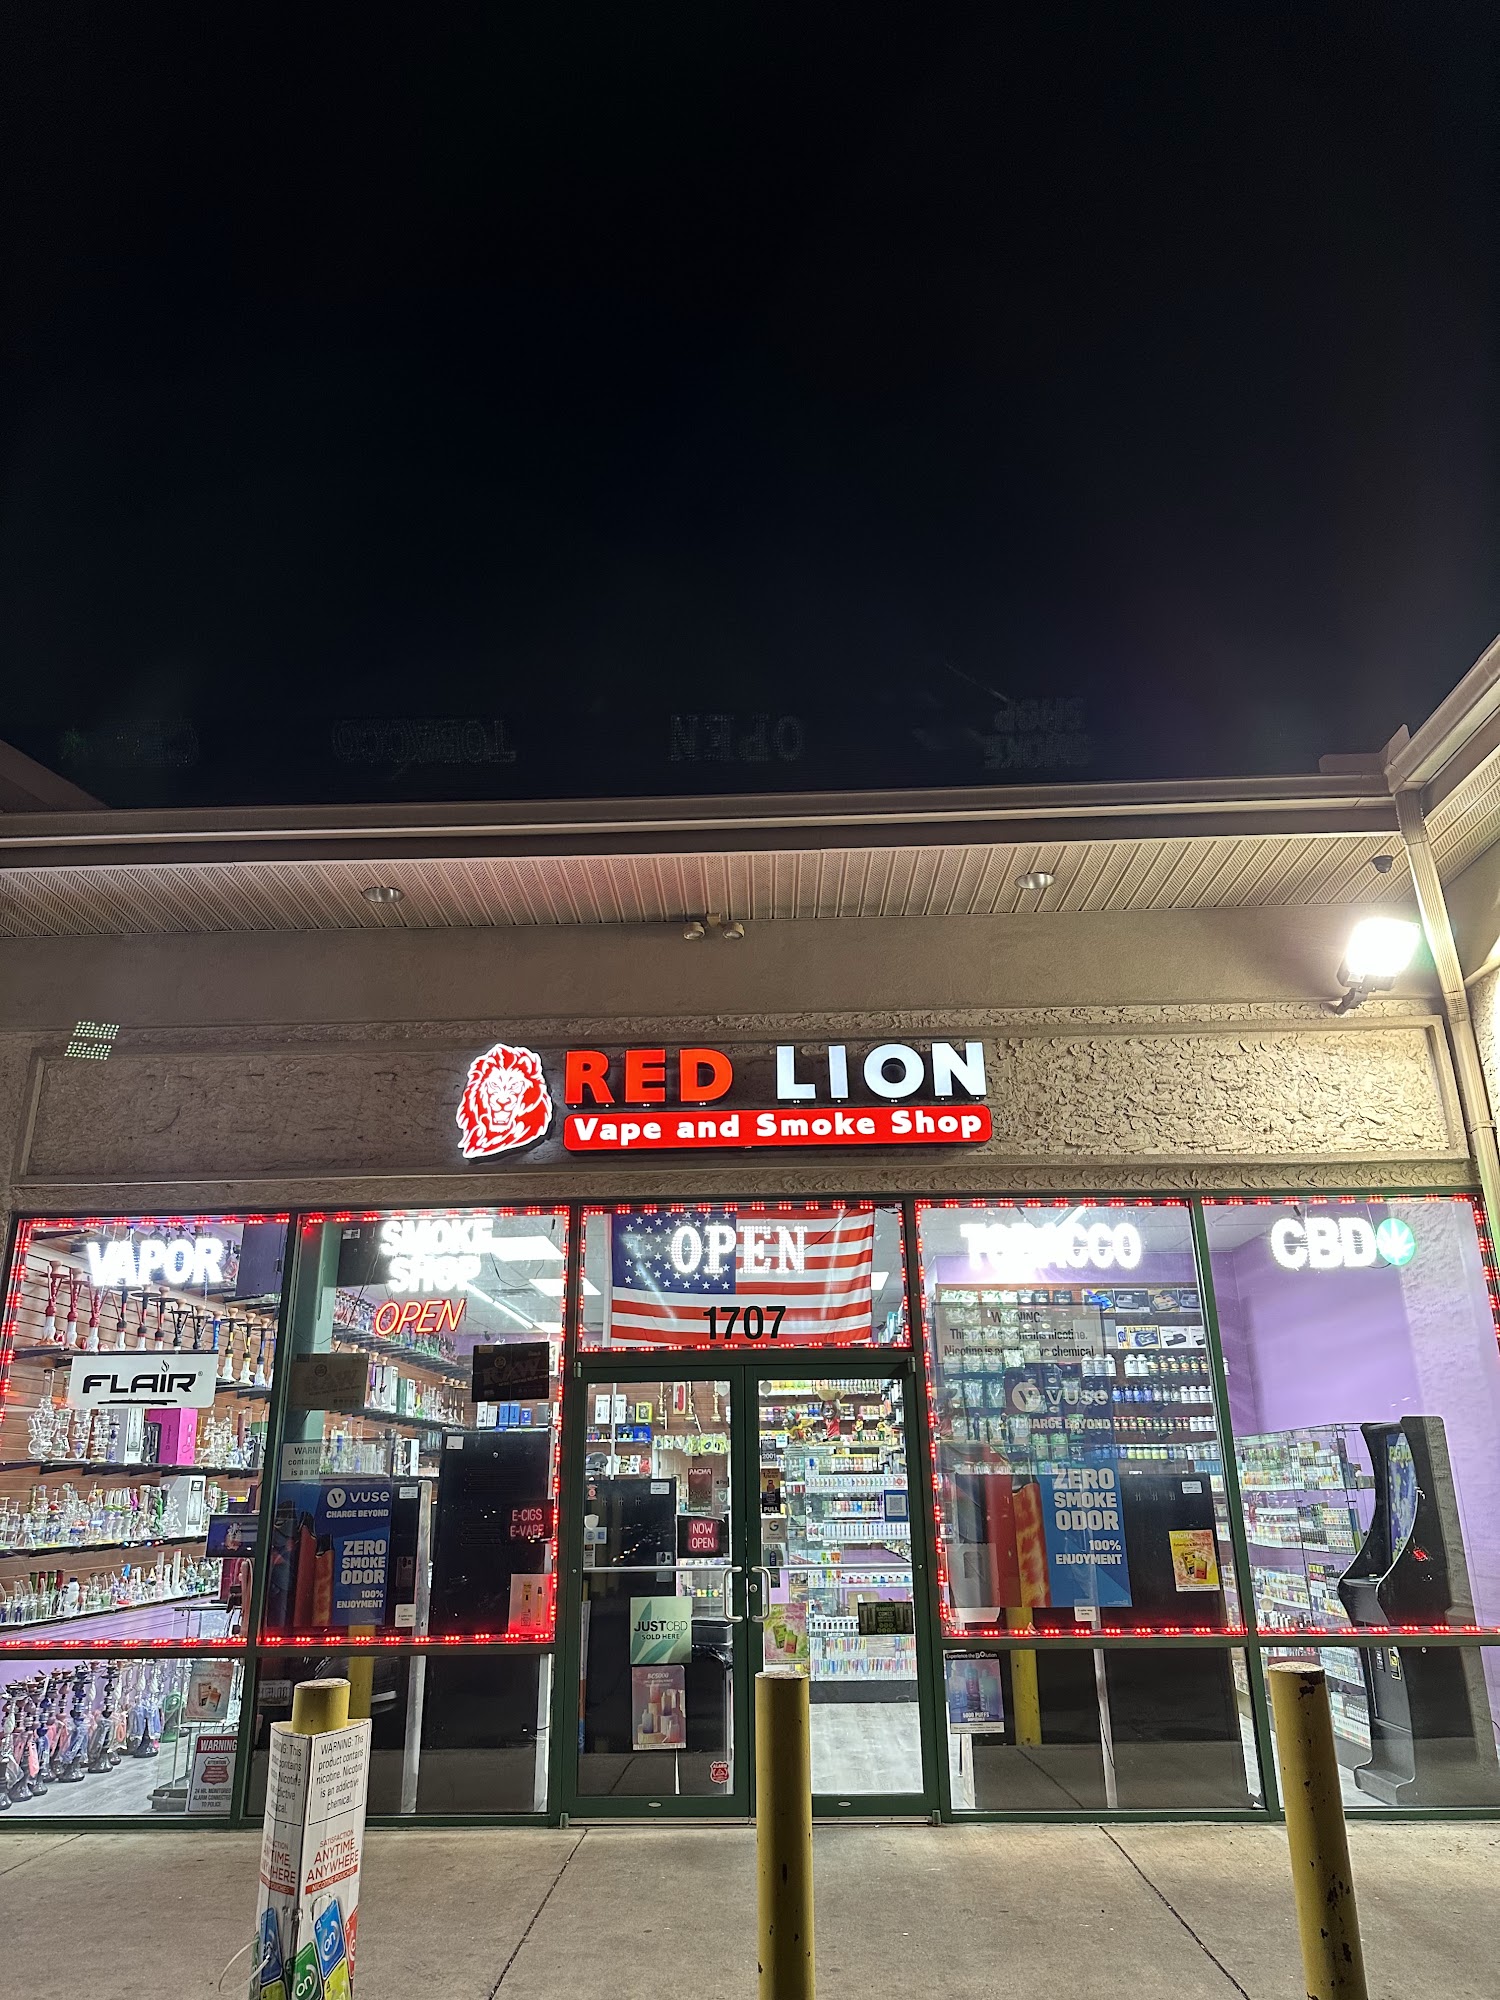 Red lion Vape & Smoke Shop